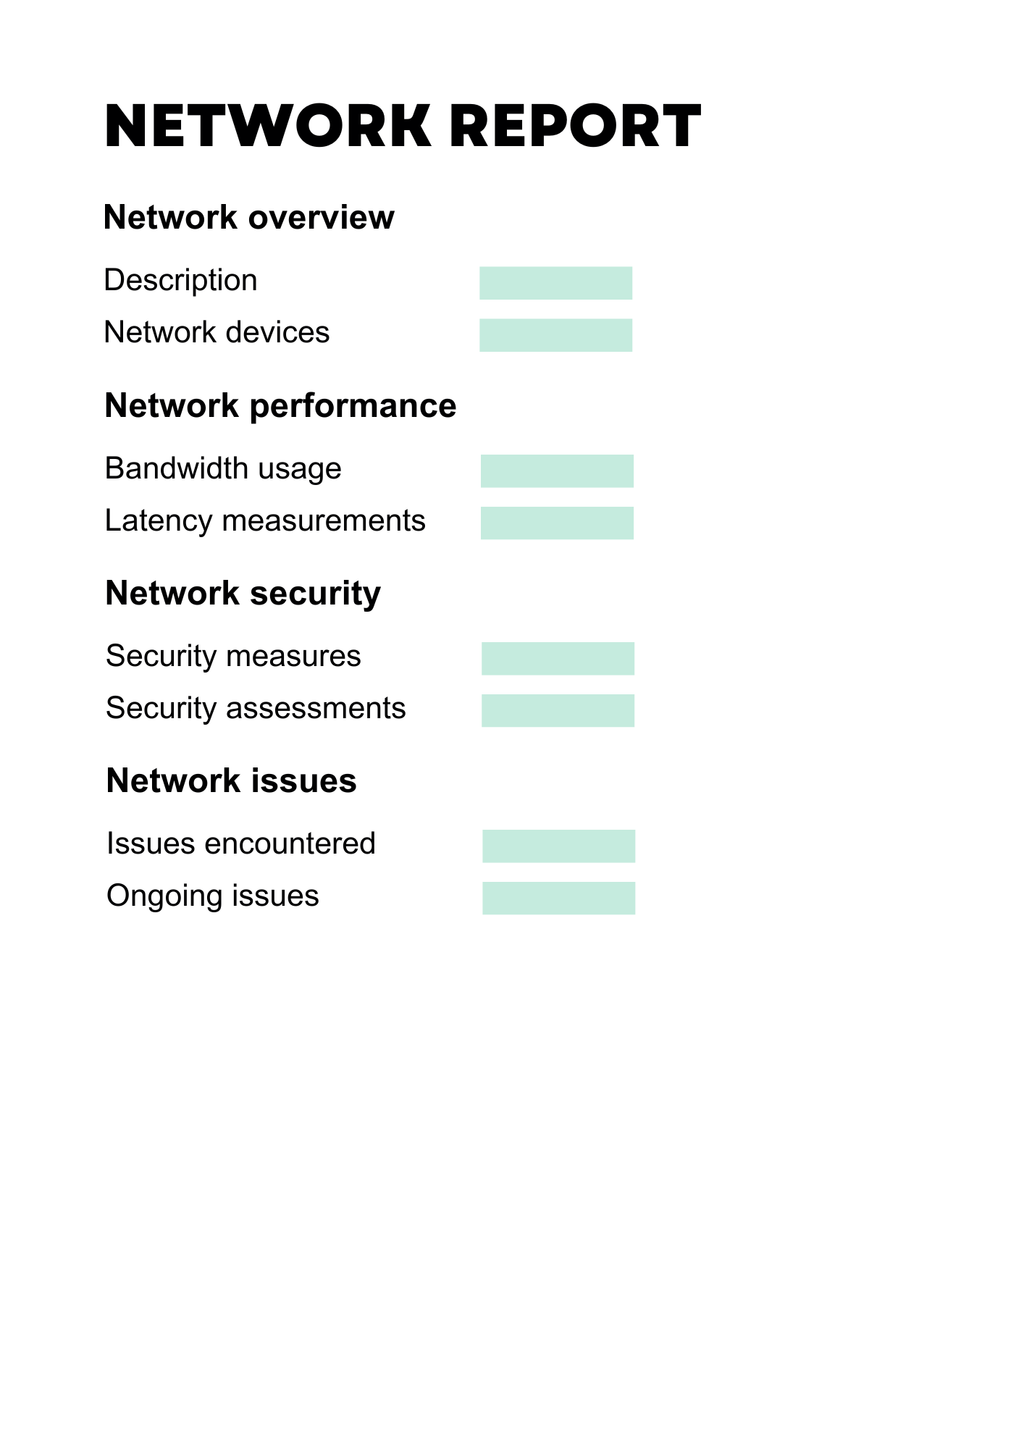 a visual representing a standard network report